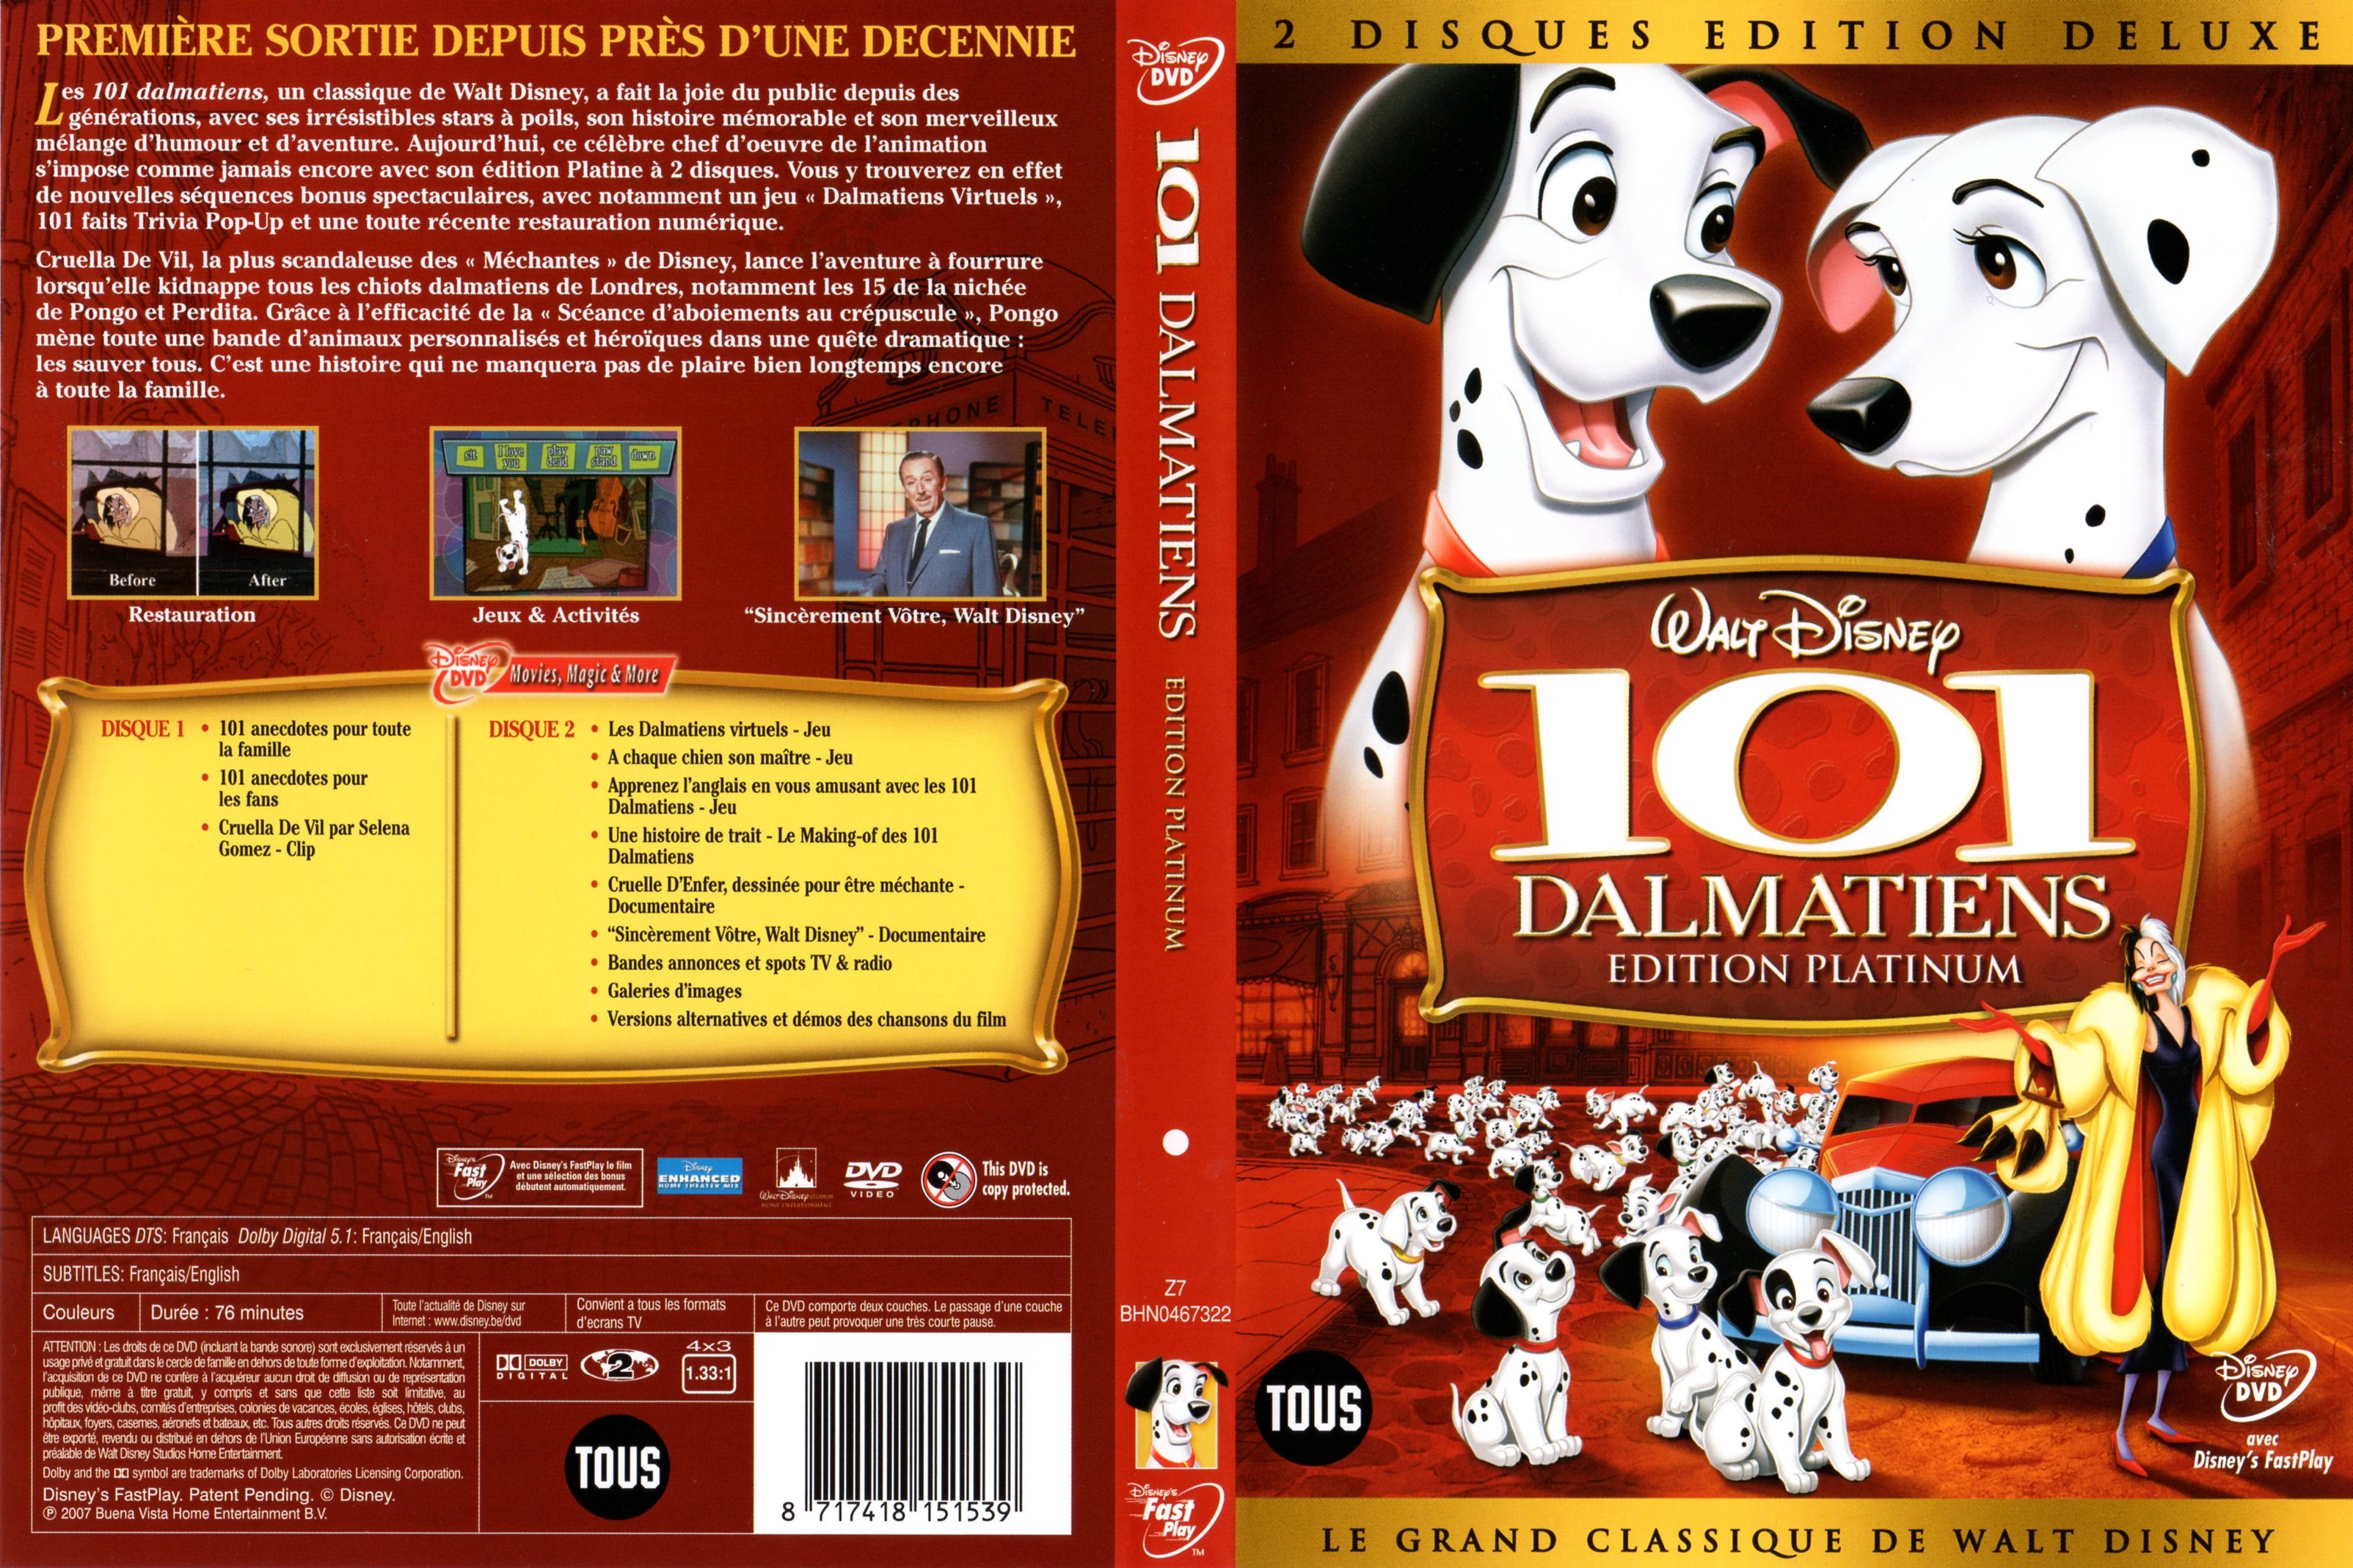 Jaquette DVD Les 101 dalmatiens v4